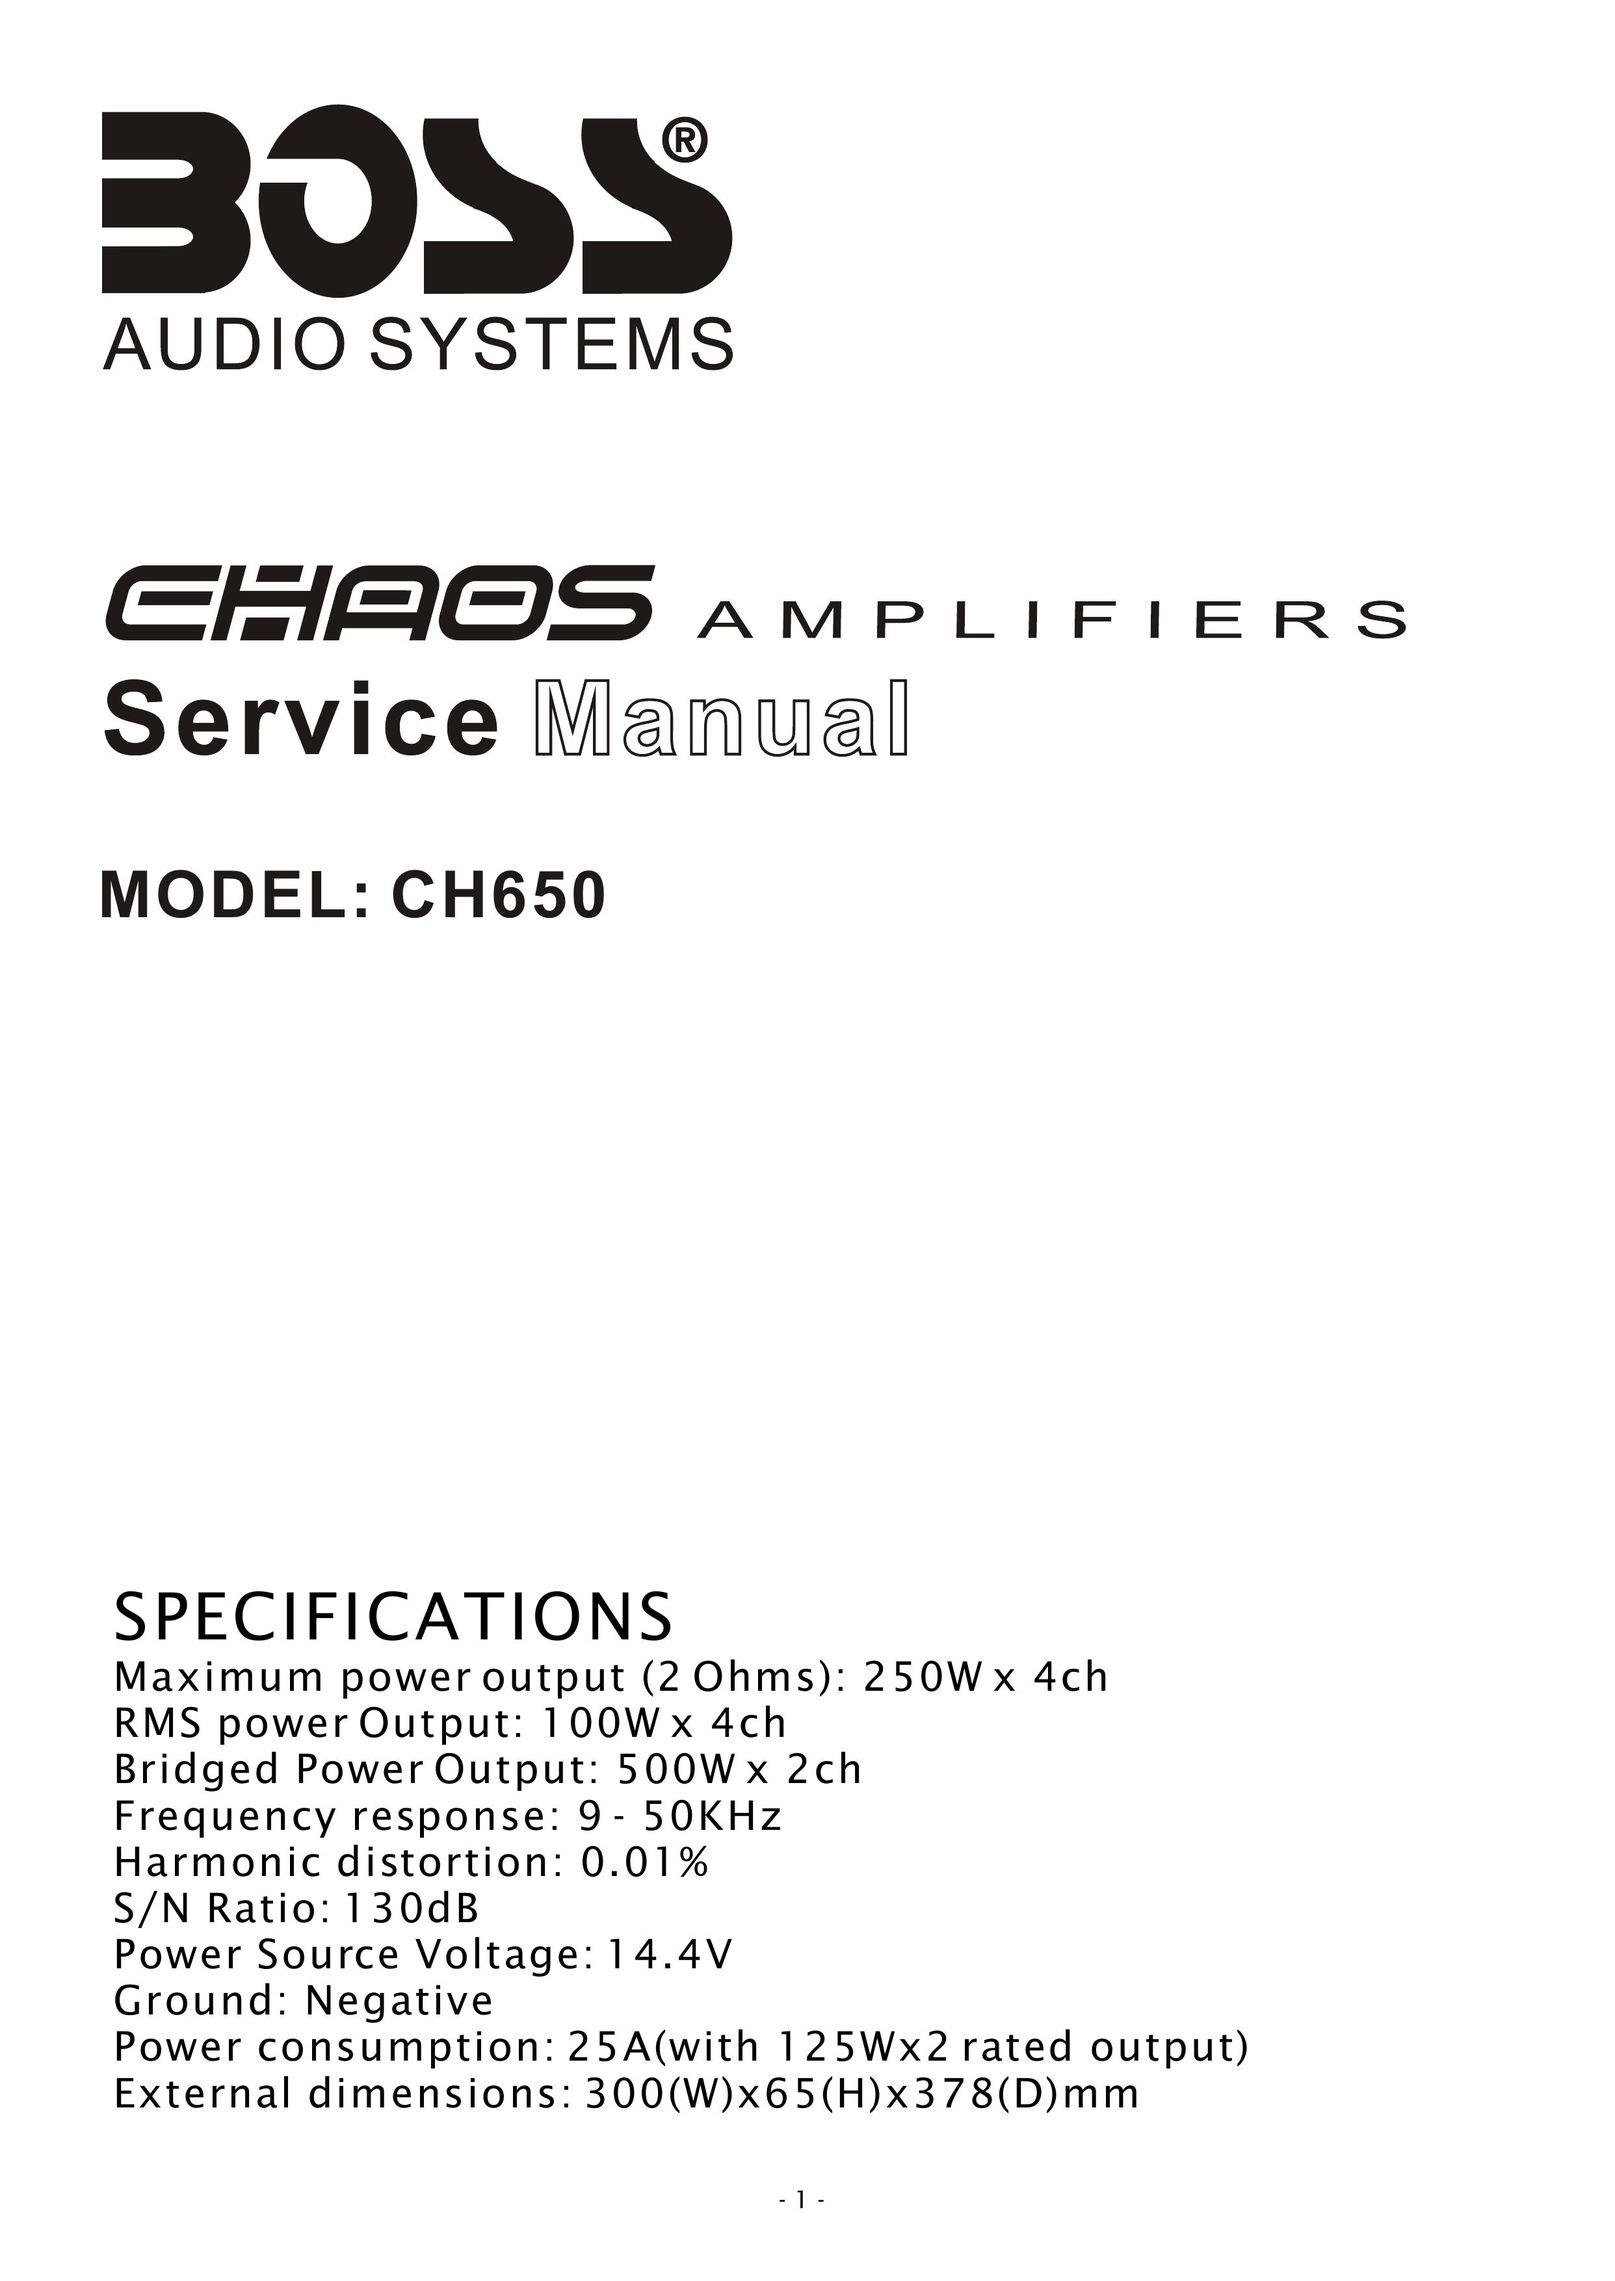 Boss Audio Systems CH650 Car Amplifier User Manual